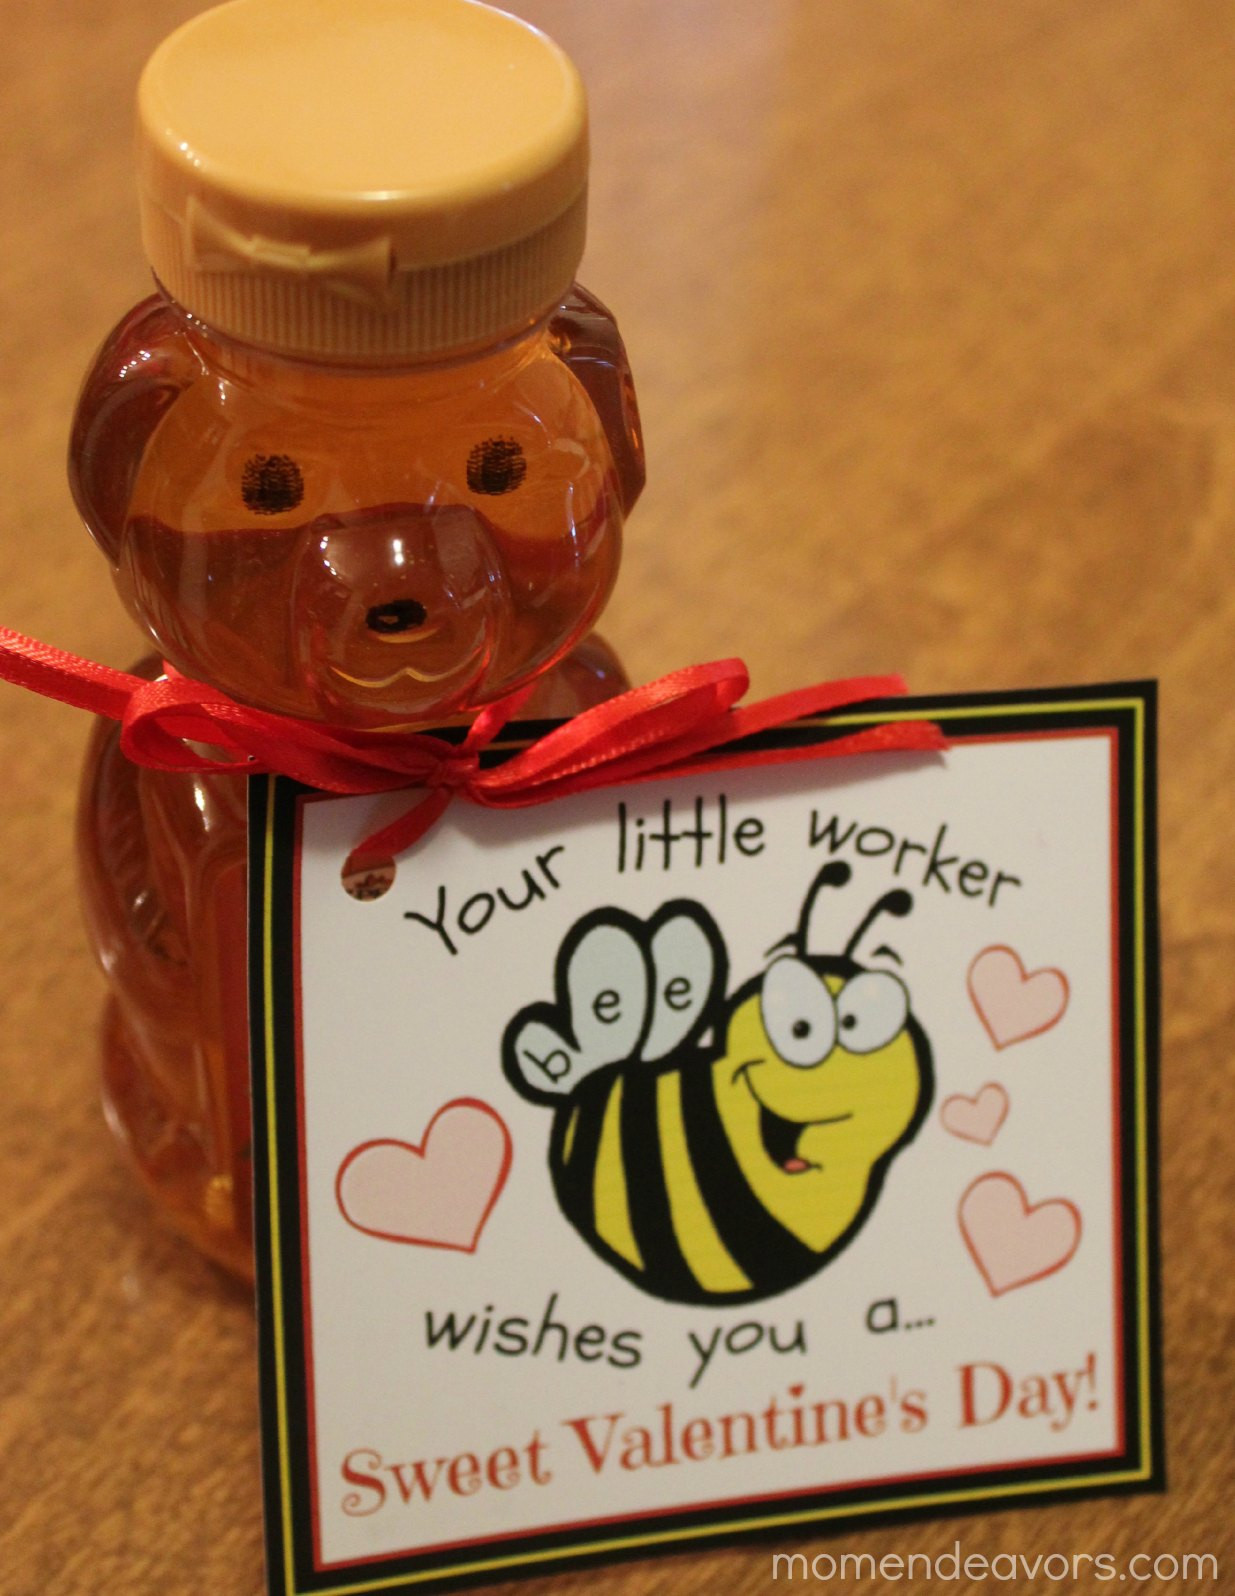 Teacher Valentine'S Day Gift Ideas
 Bee themed Teacher Valentine’s Gift